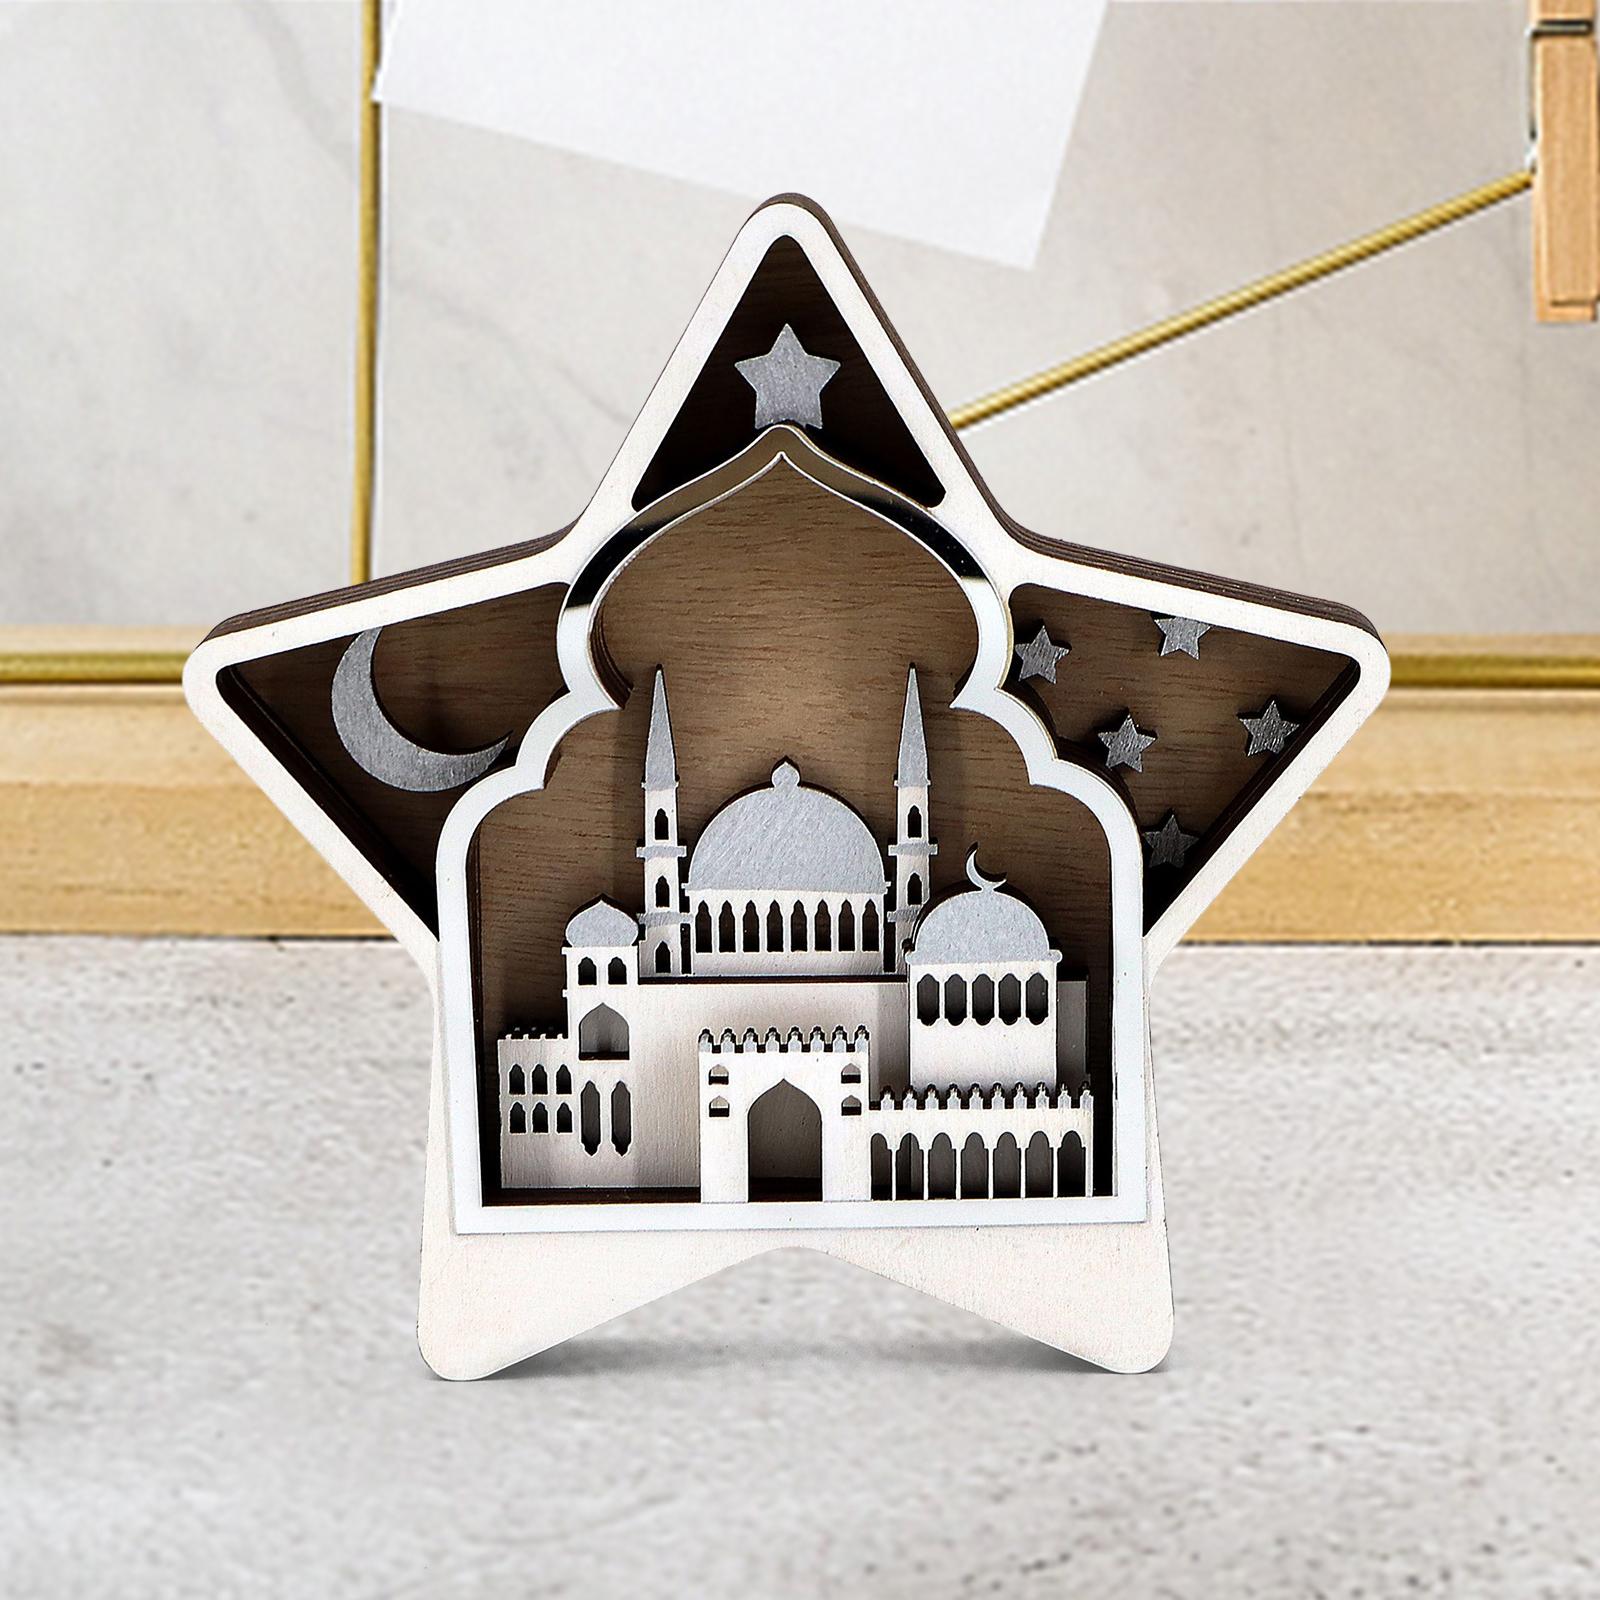 Ramadan Wooden Ornament Handicraft Islamic Home Decration Muslim Gift Argent